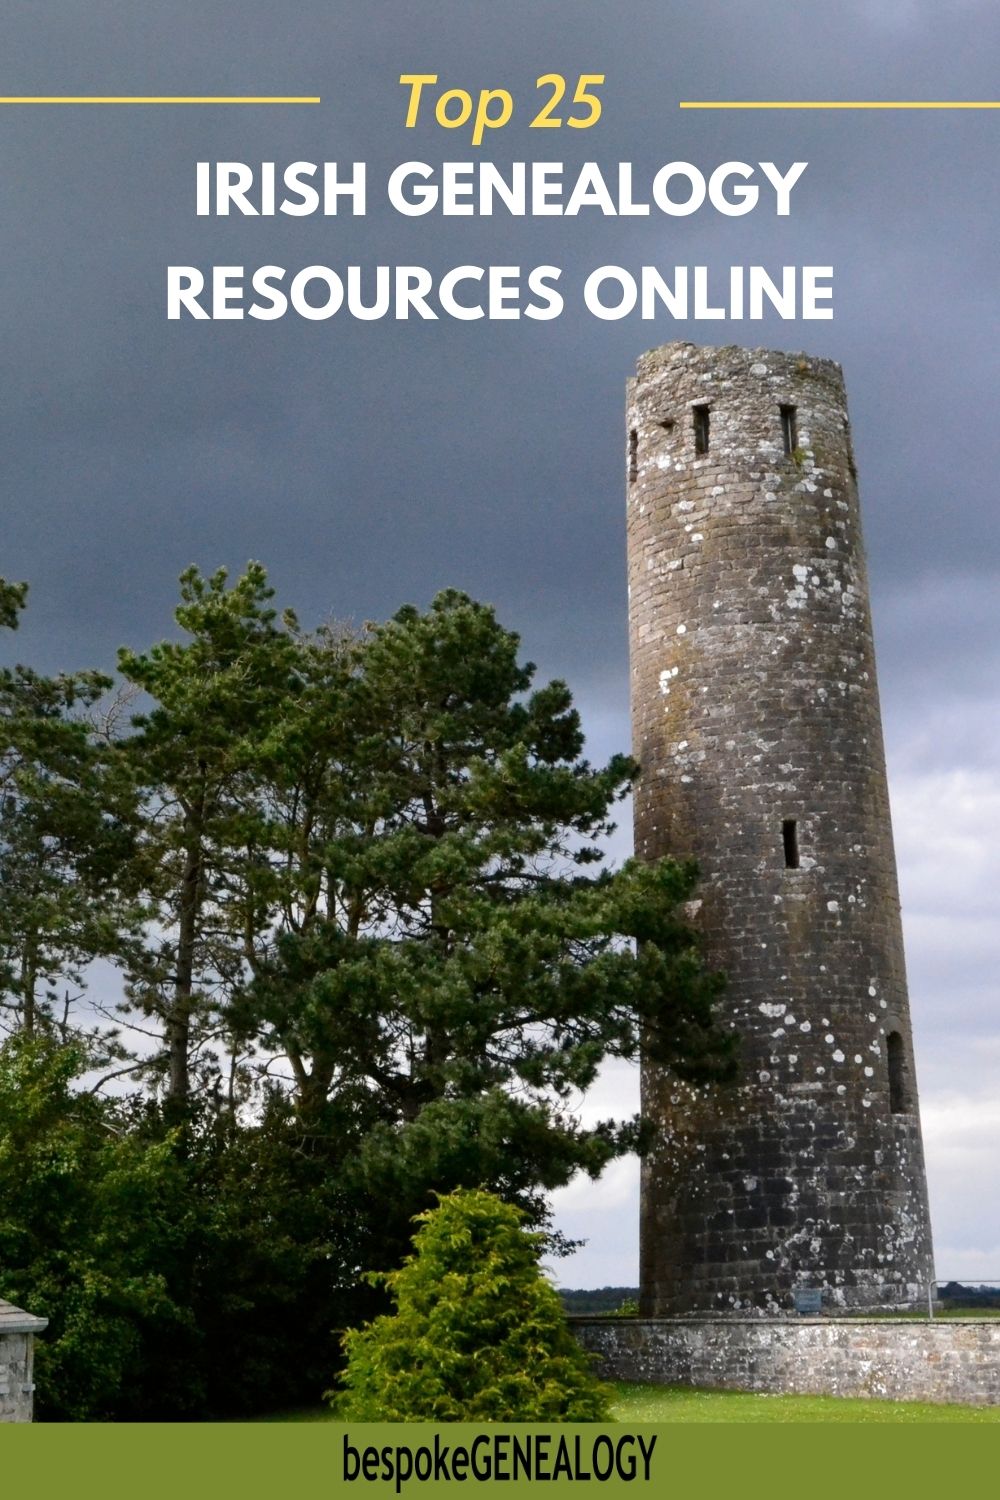 Top 25 Irish genealogy resources online. Photo of an ancient Irish tower.